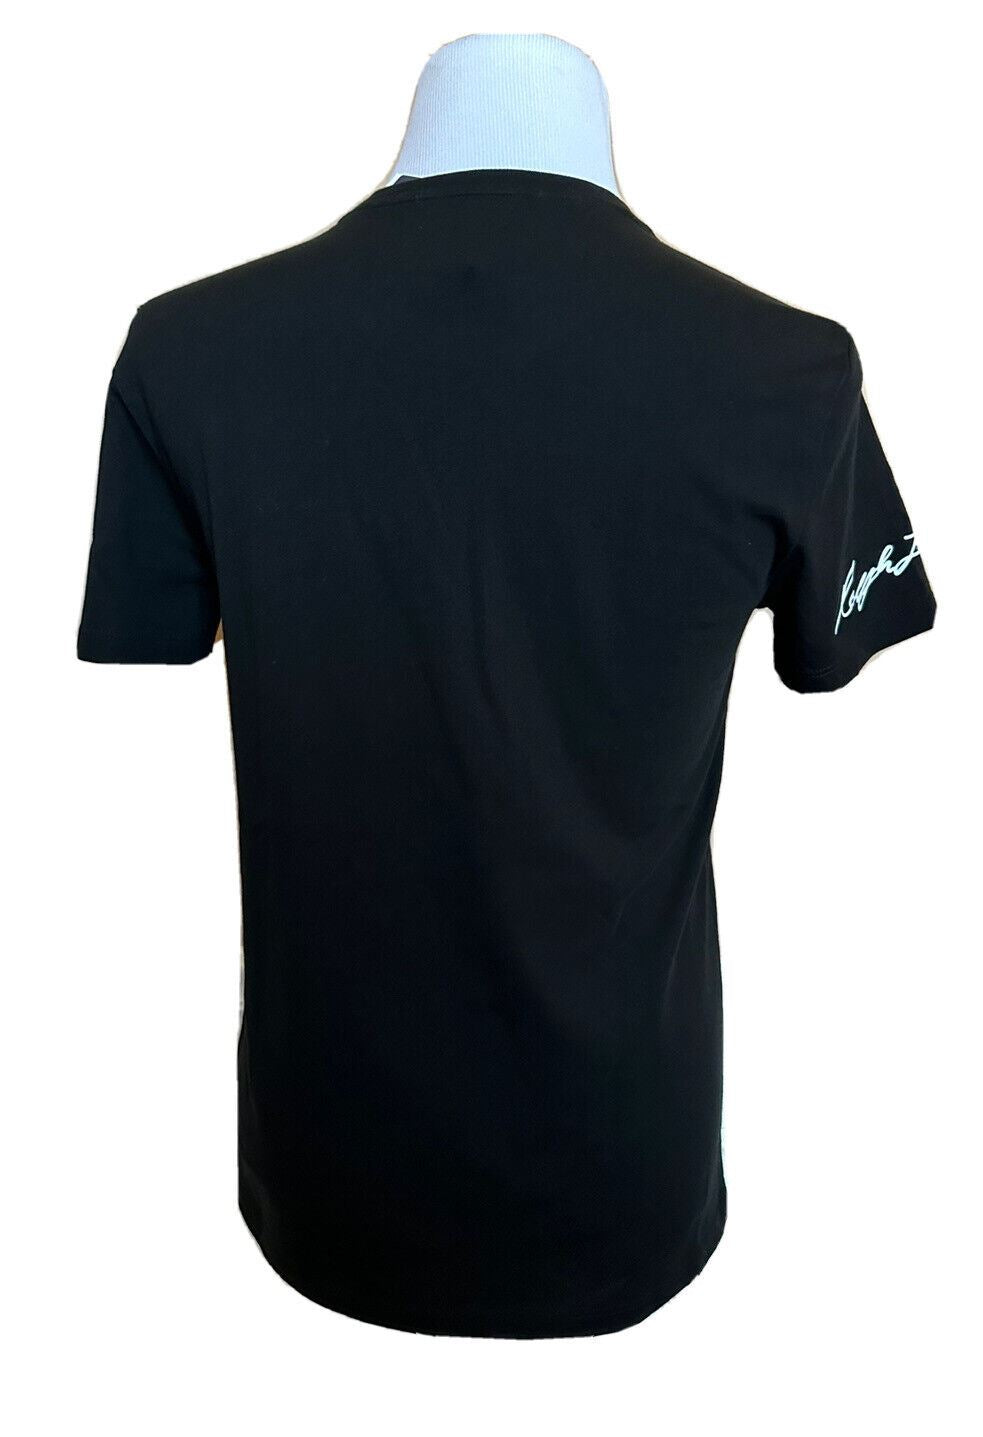 Черная футболка с короткими рукавами и логотипом Polo Ralph Lauren, размер NWT 65 долларов США, размер S 